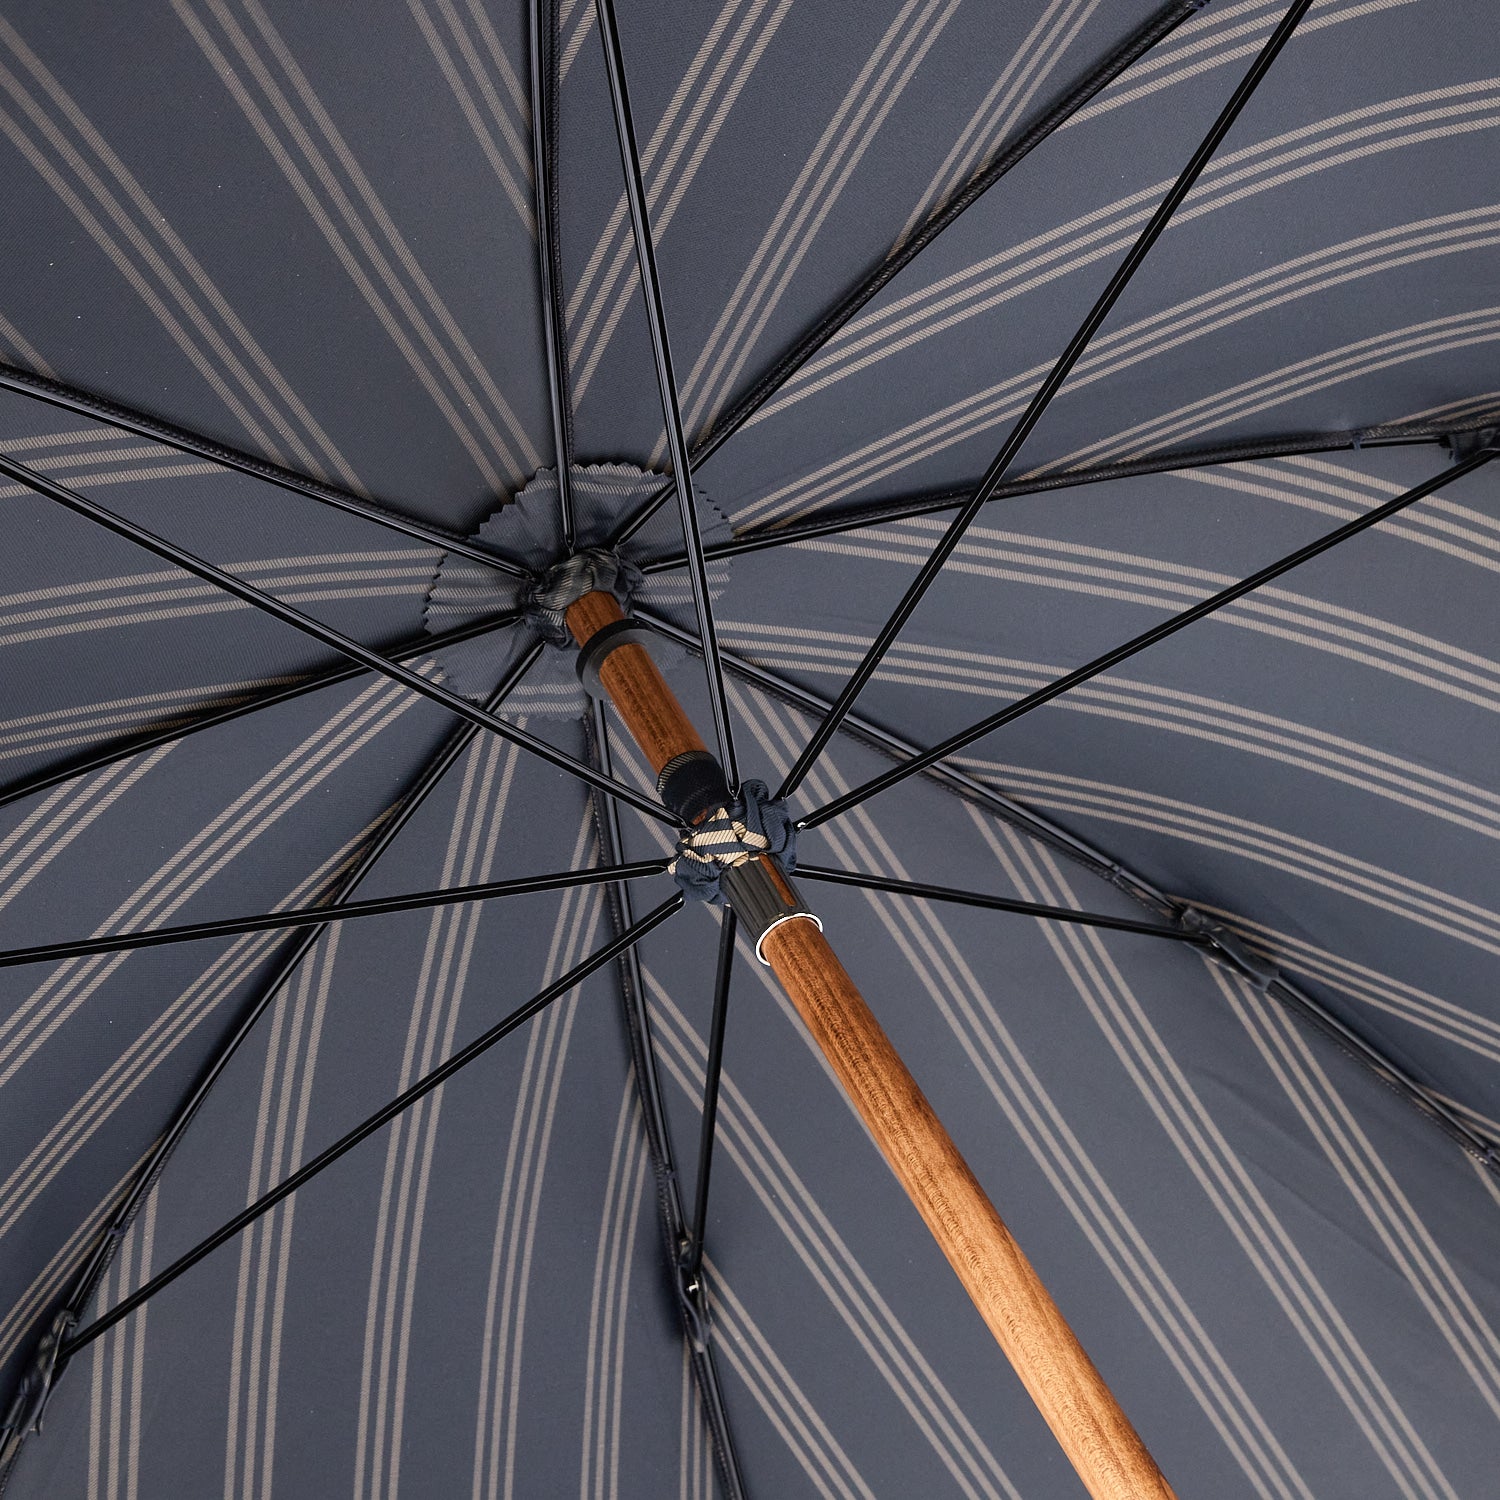 Maglia Francesco Navy Striped Umbrella with Maple Handle